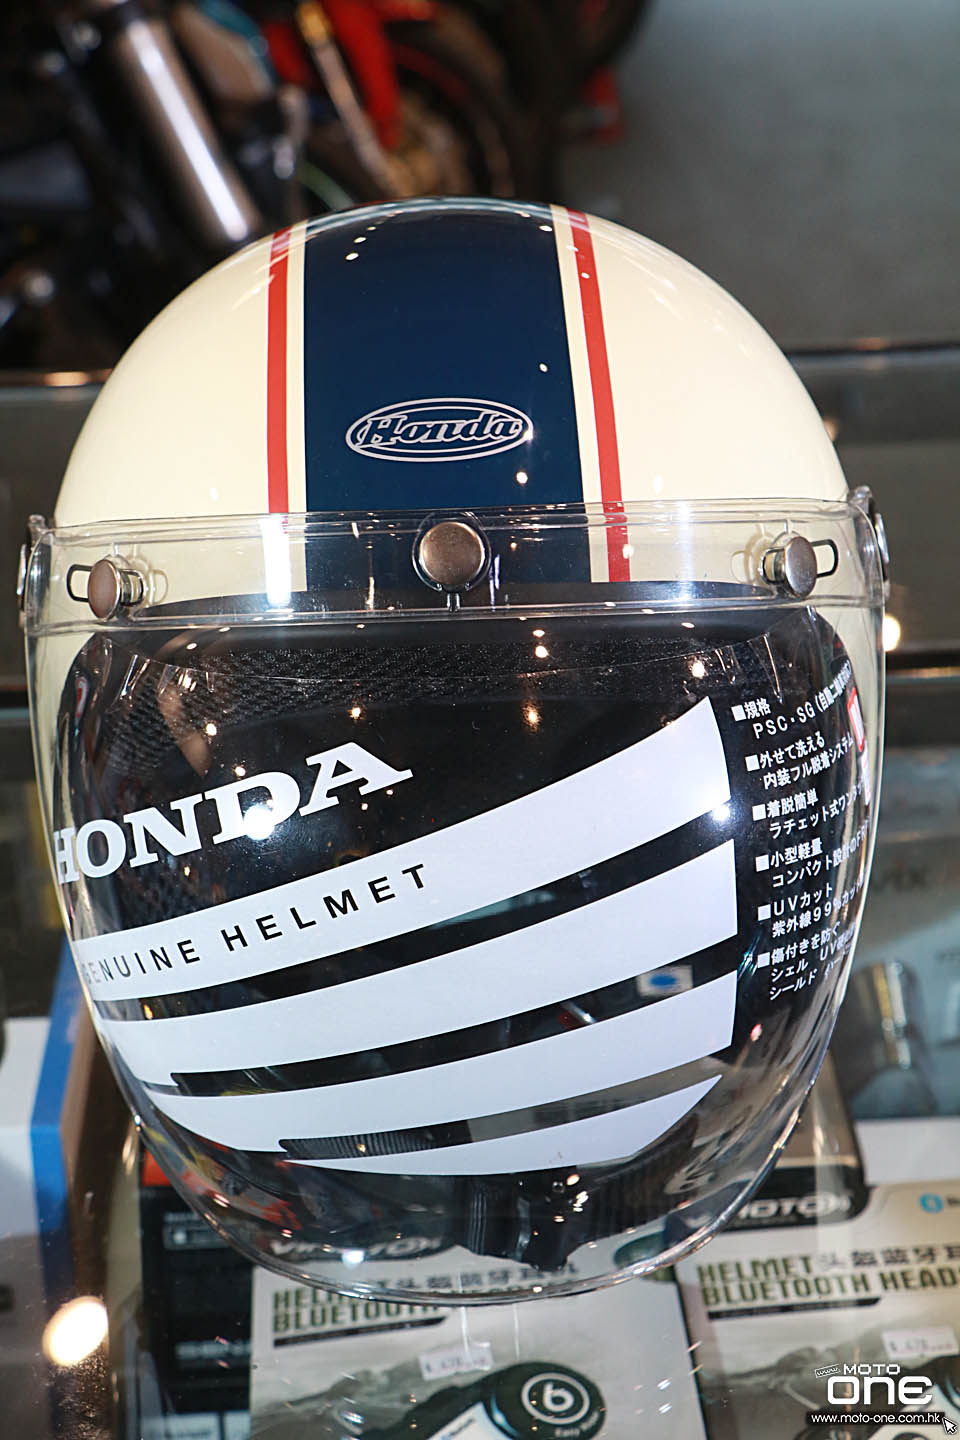 2018 HONDA MONKEY helmets